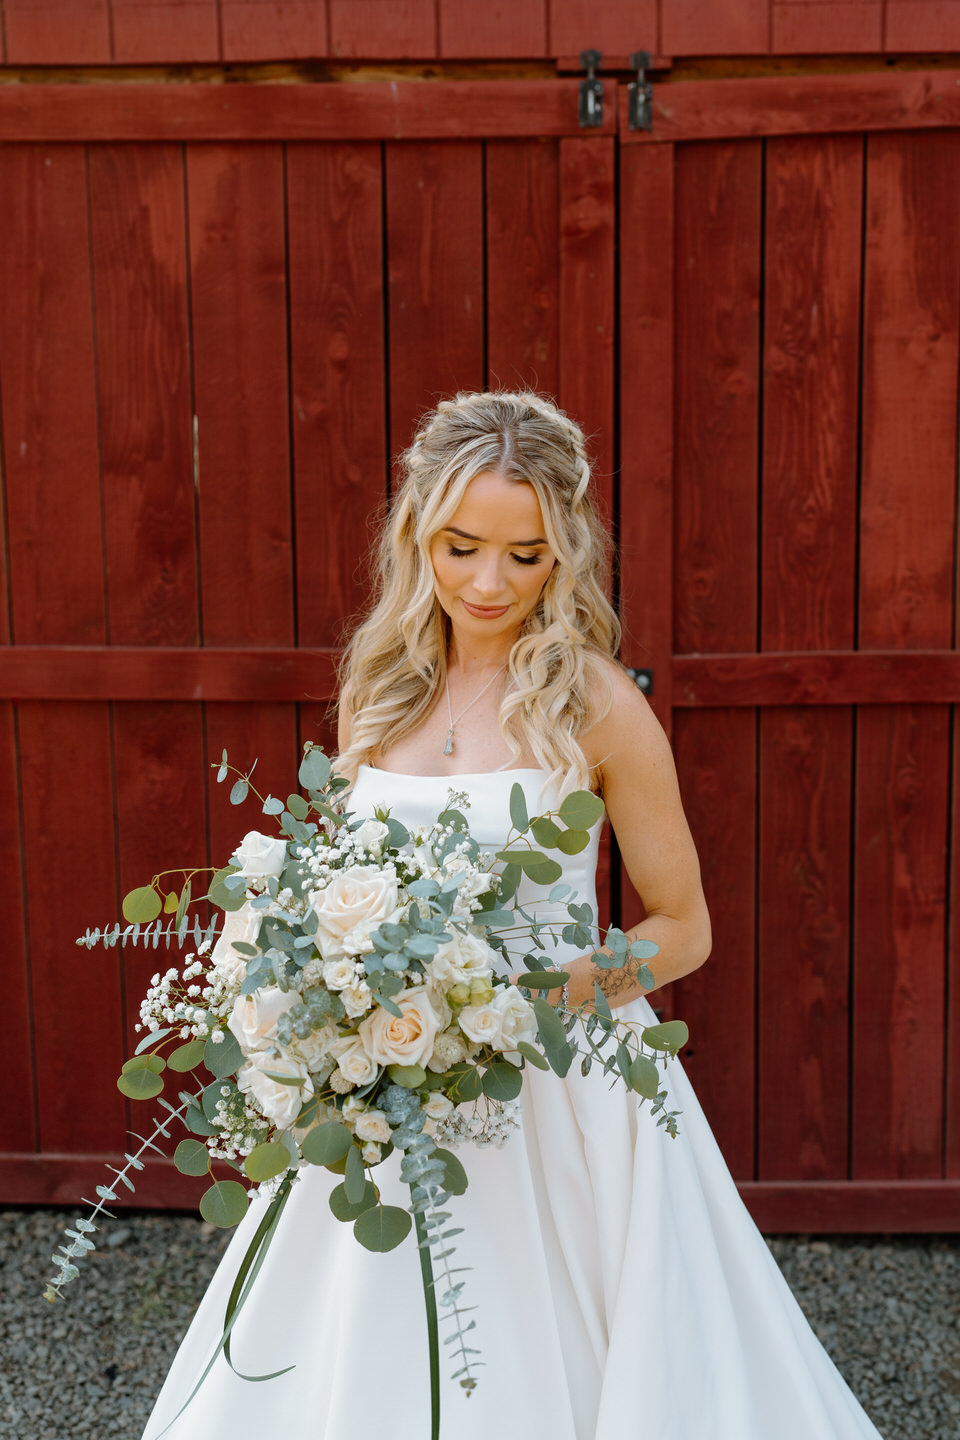 bridal hair and makeup look for rustic barn wedding